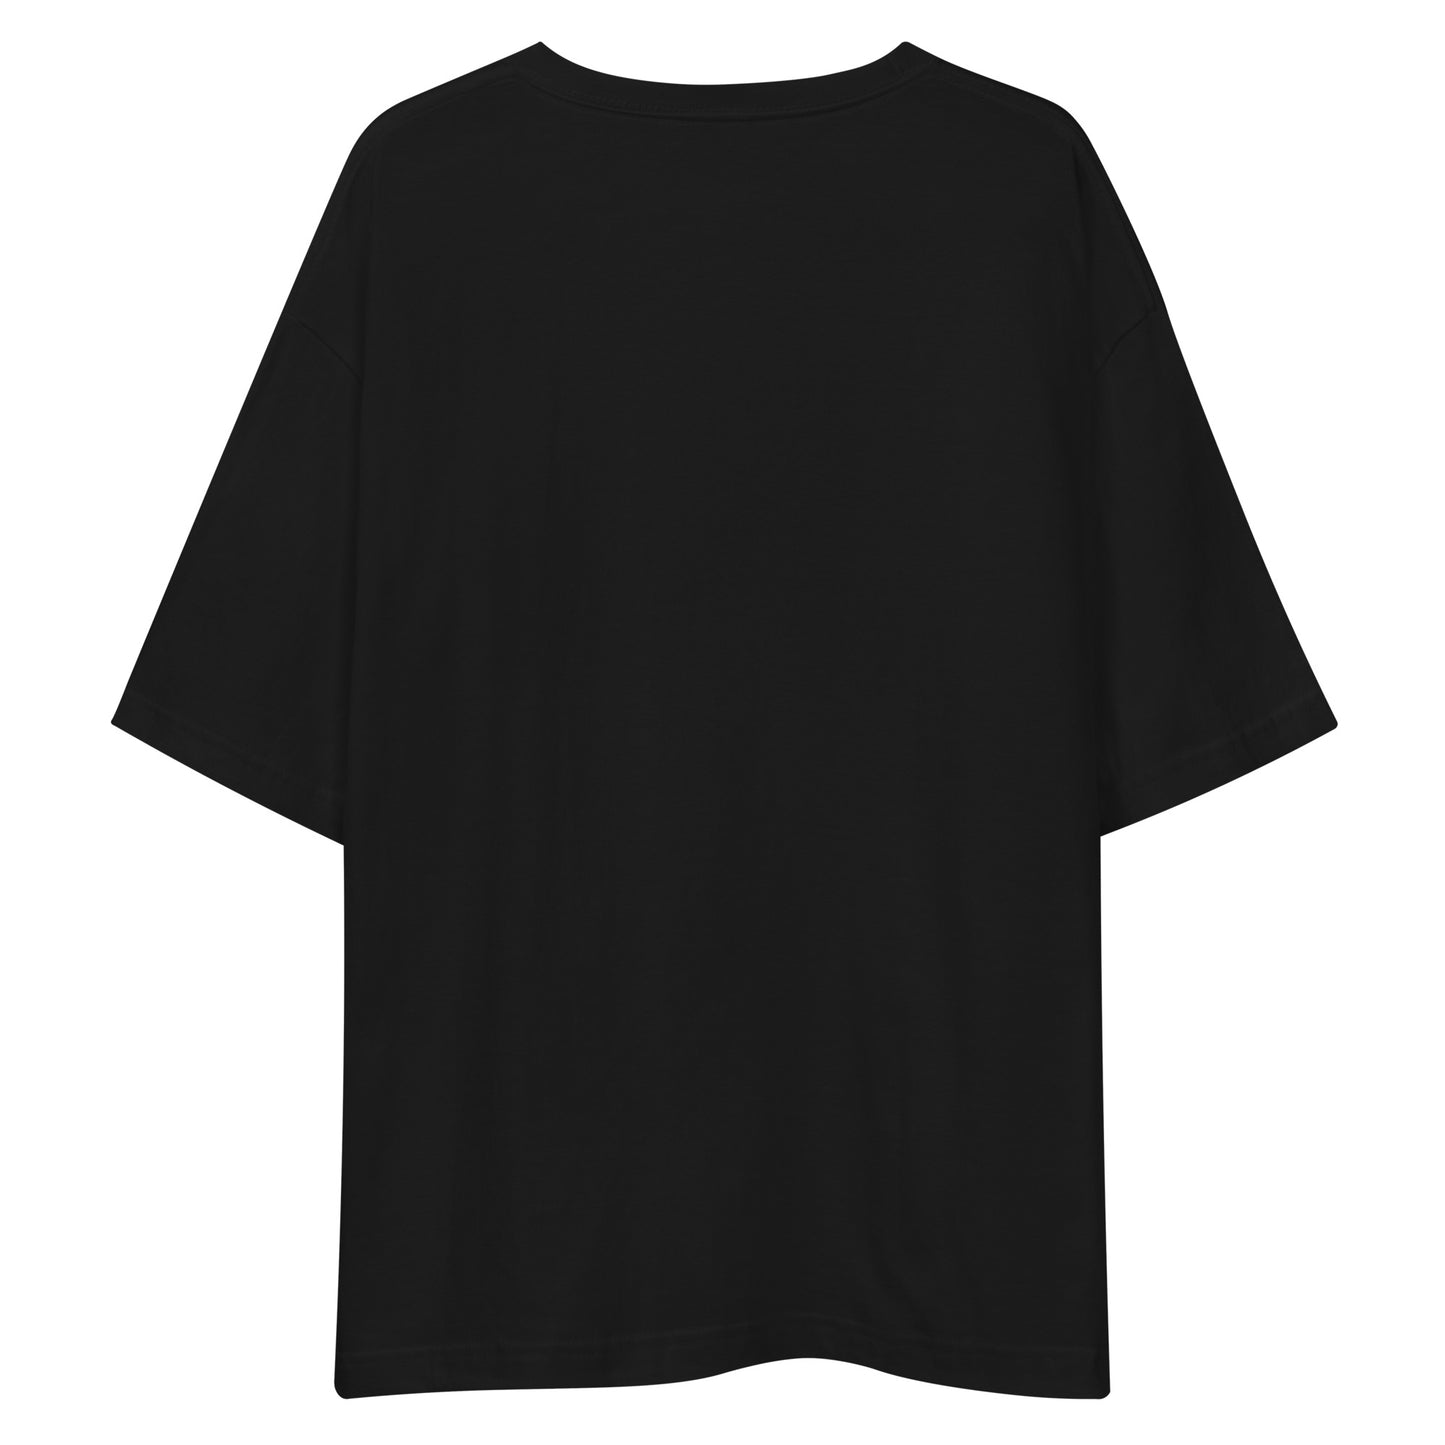 H200 - T-shirt/Oversized (Hunting : Black)